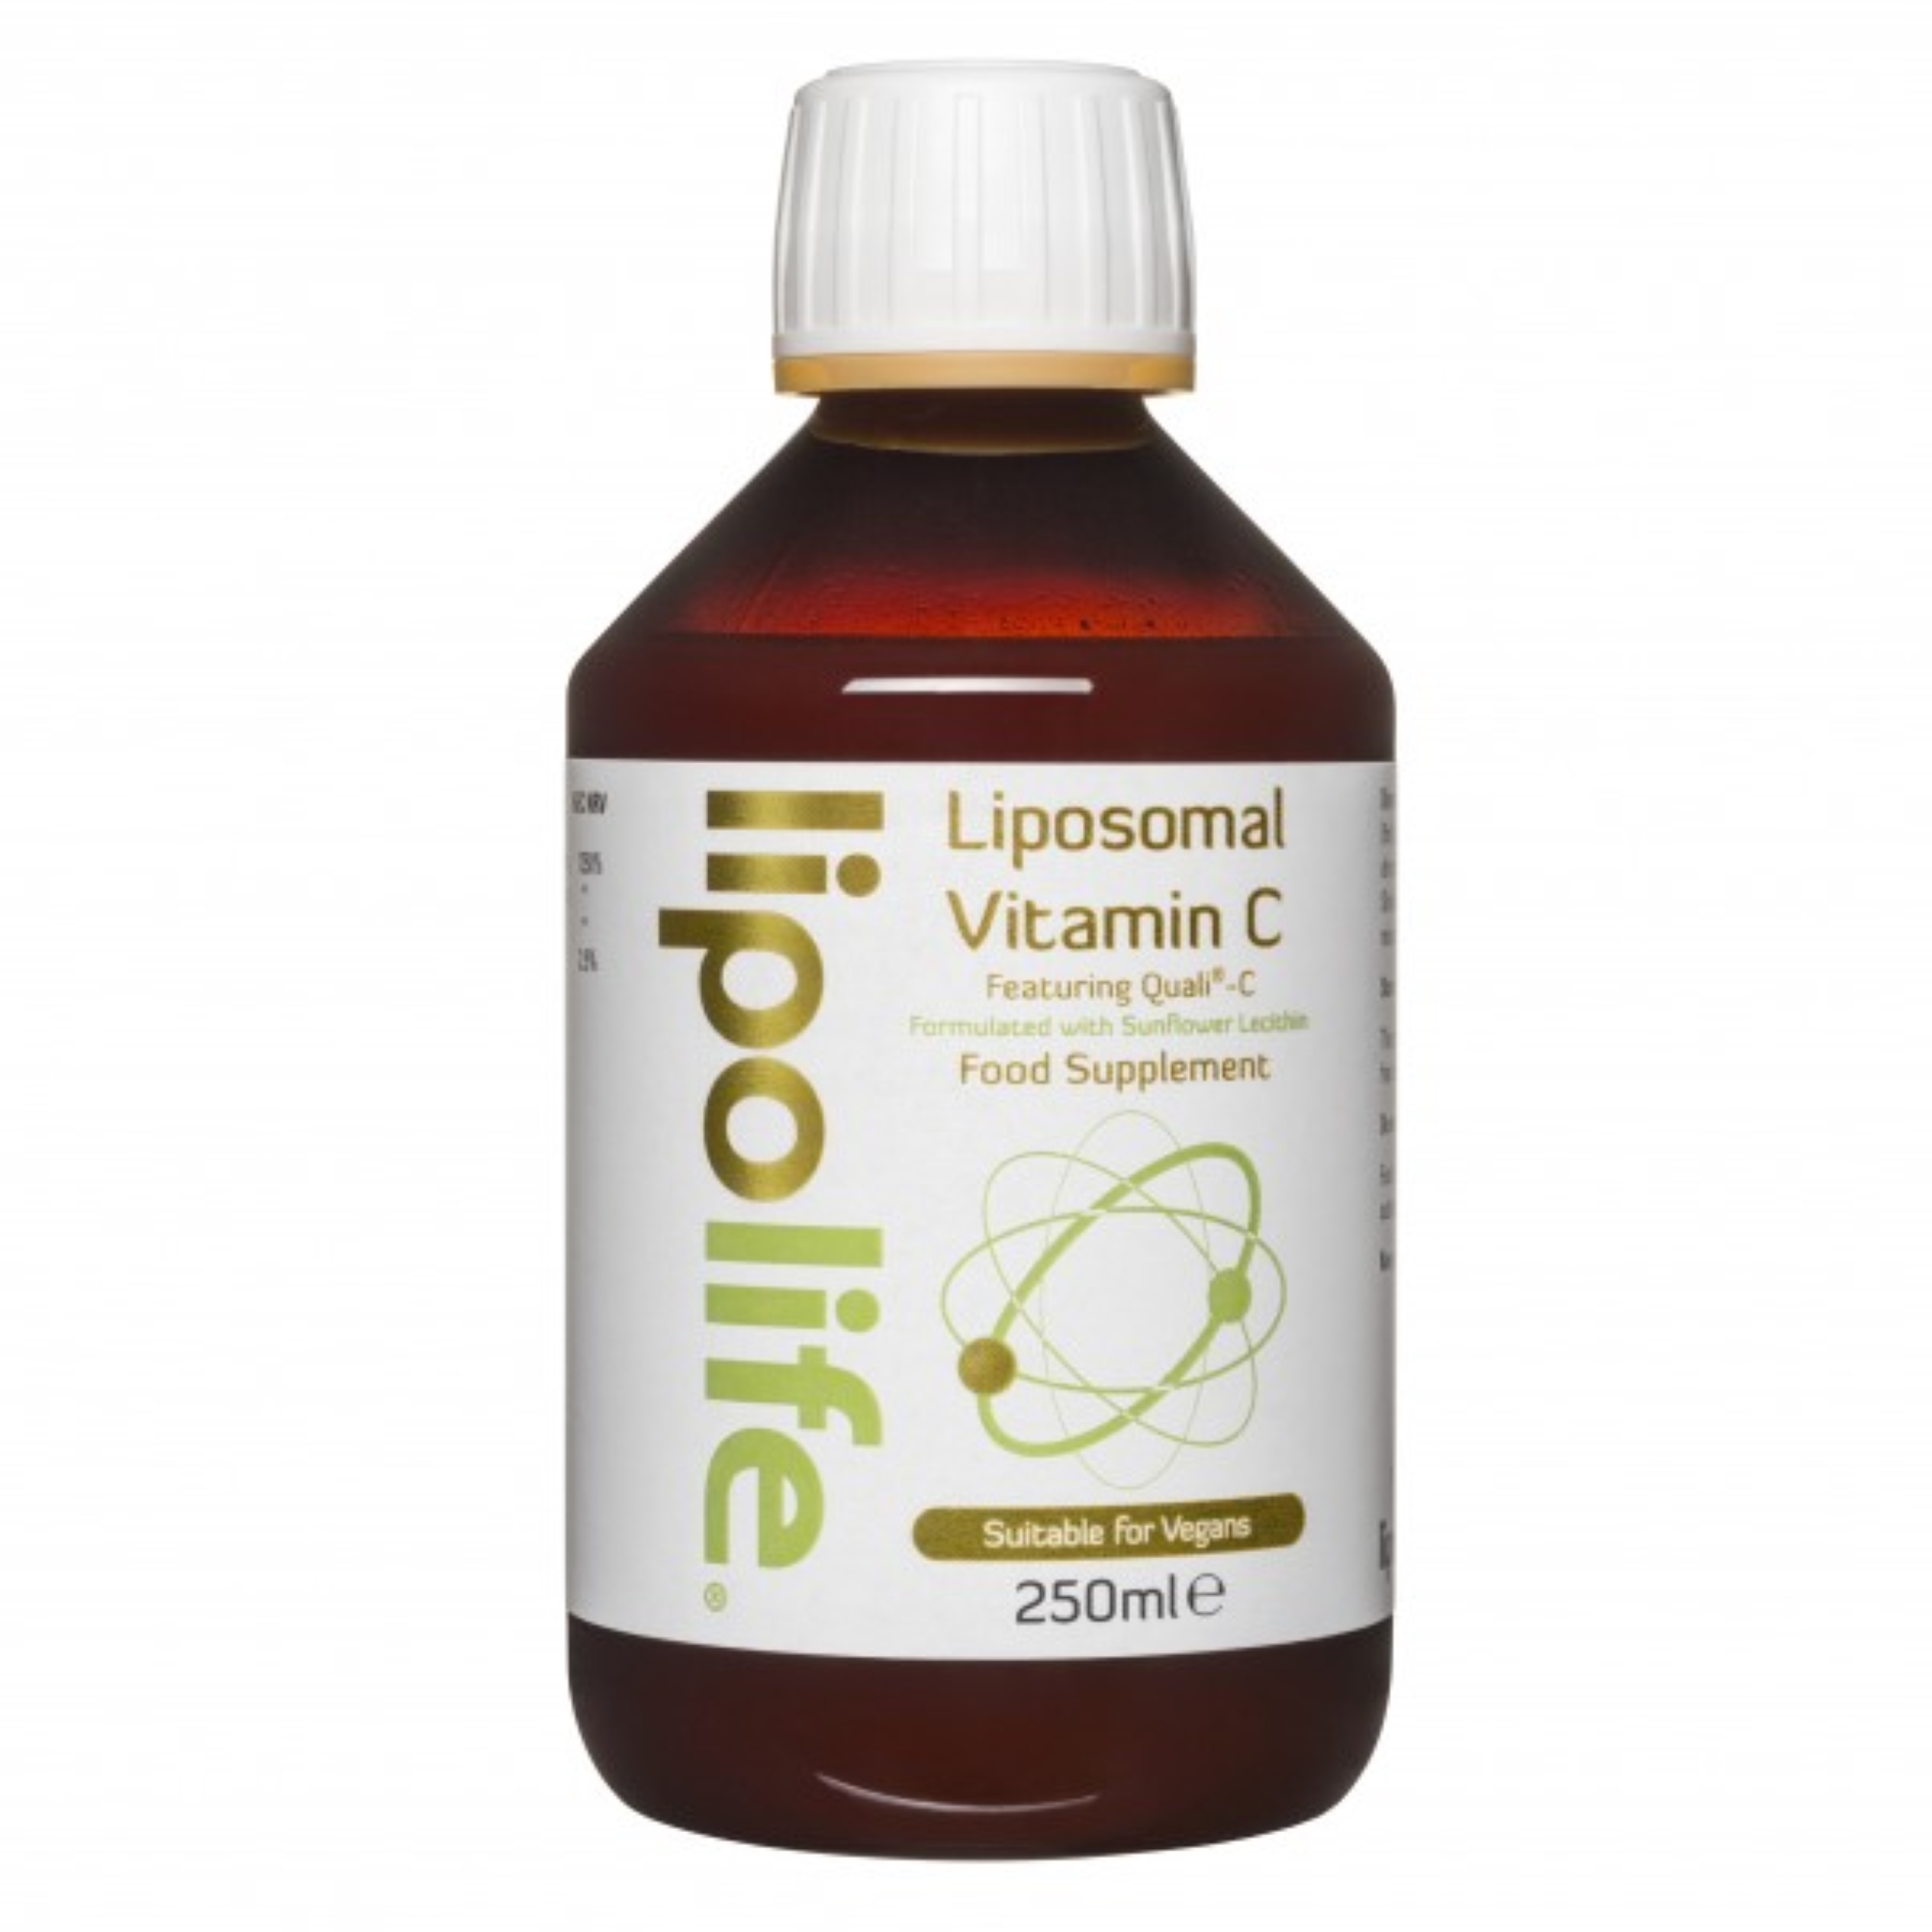 The best Liposomal Vitamin C